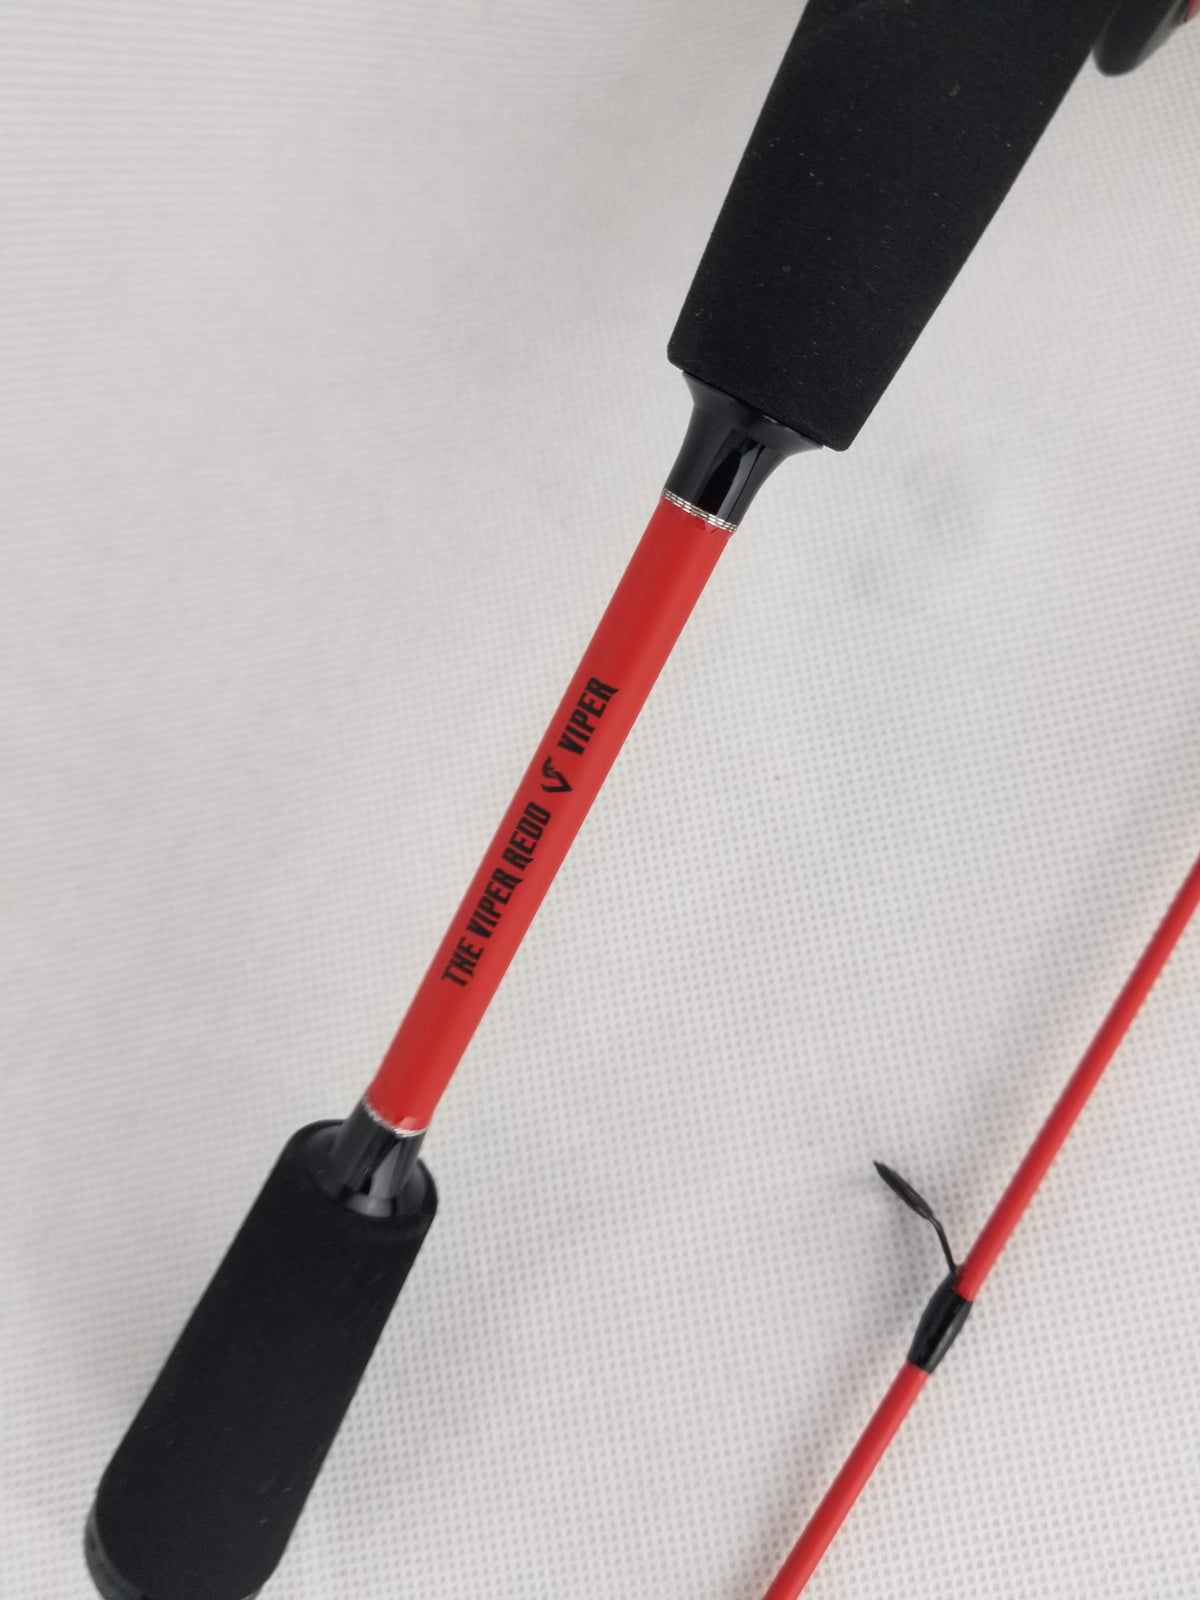 The Viper Redd 6'6" Ft  Carbon Fiber xtralite Rod and Reel Combo Kit